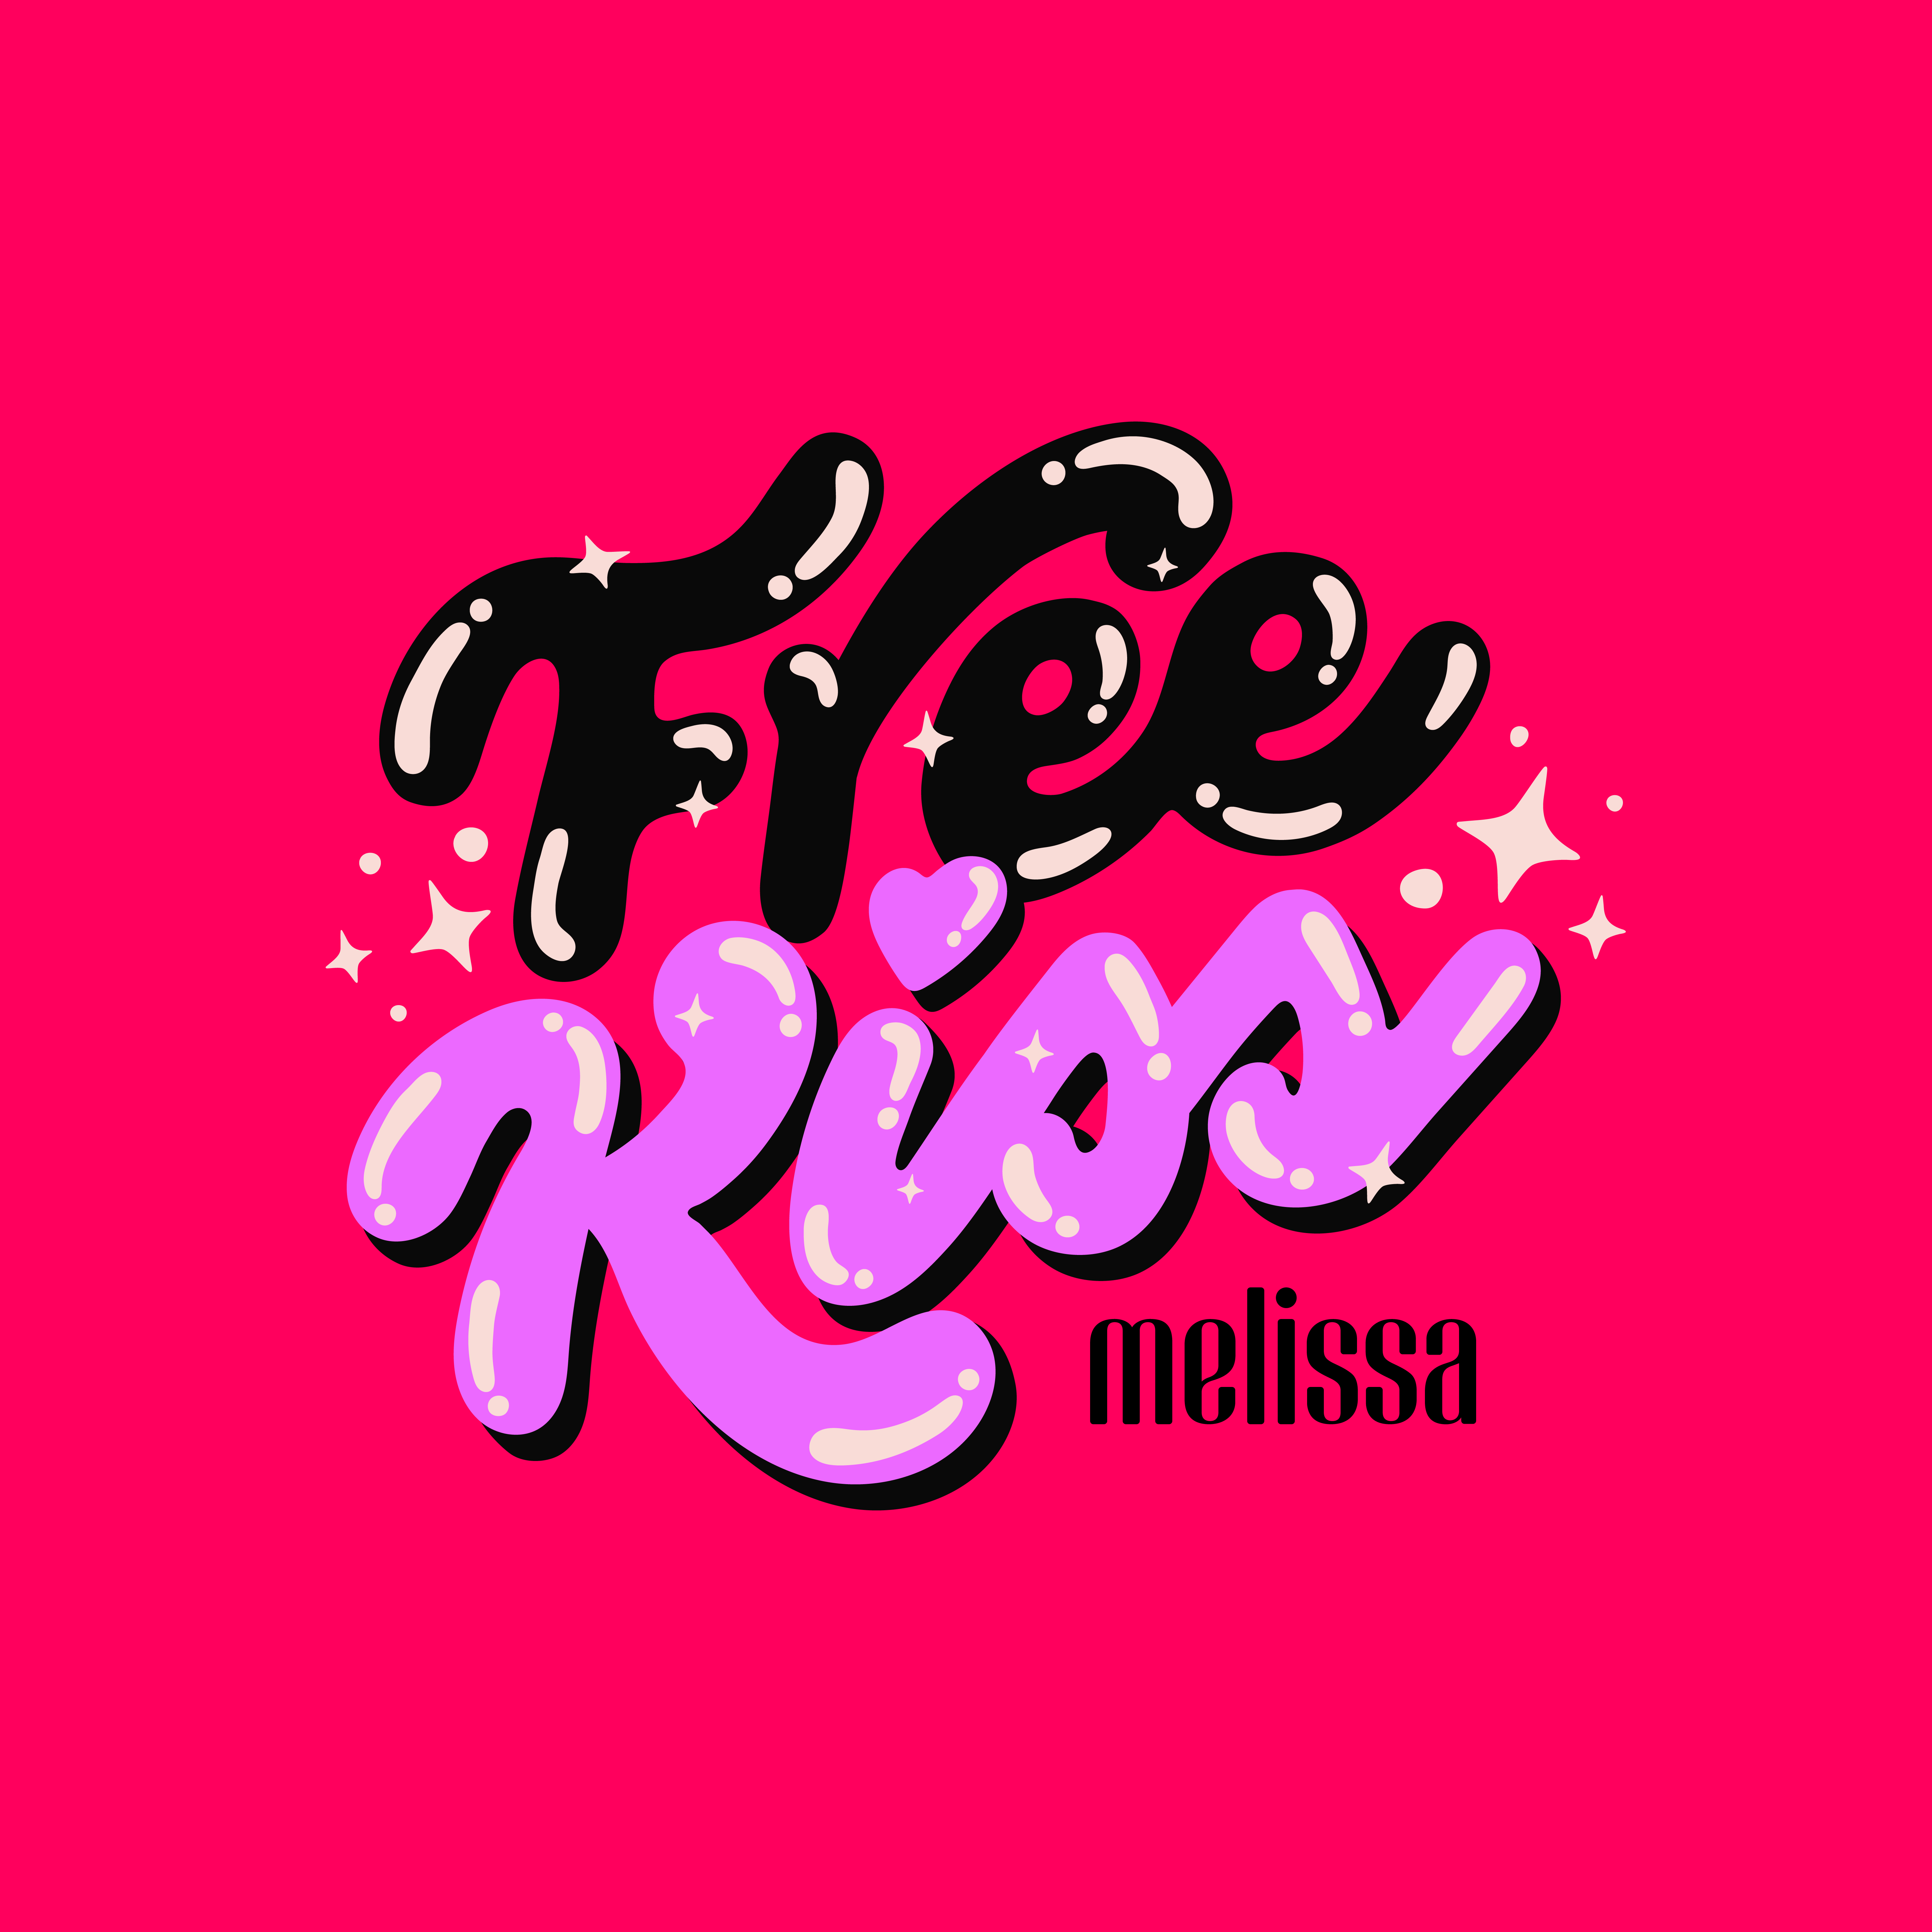 lebassis-melissa-free-kiss-jelly-london-lettering-identity